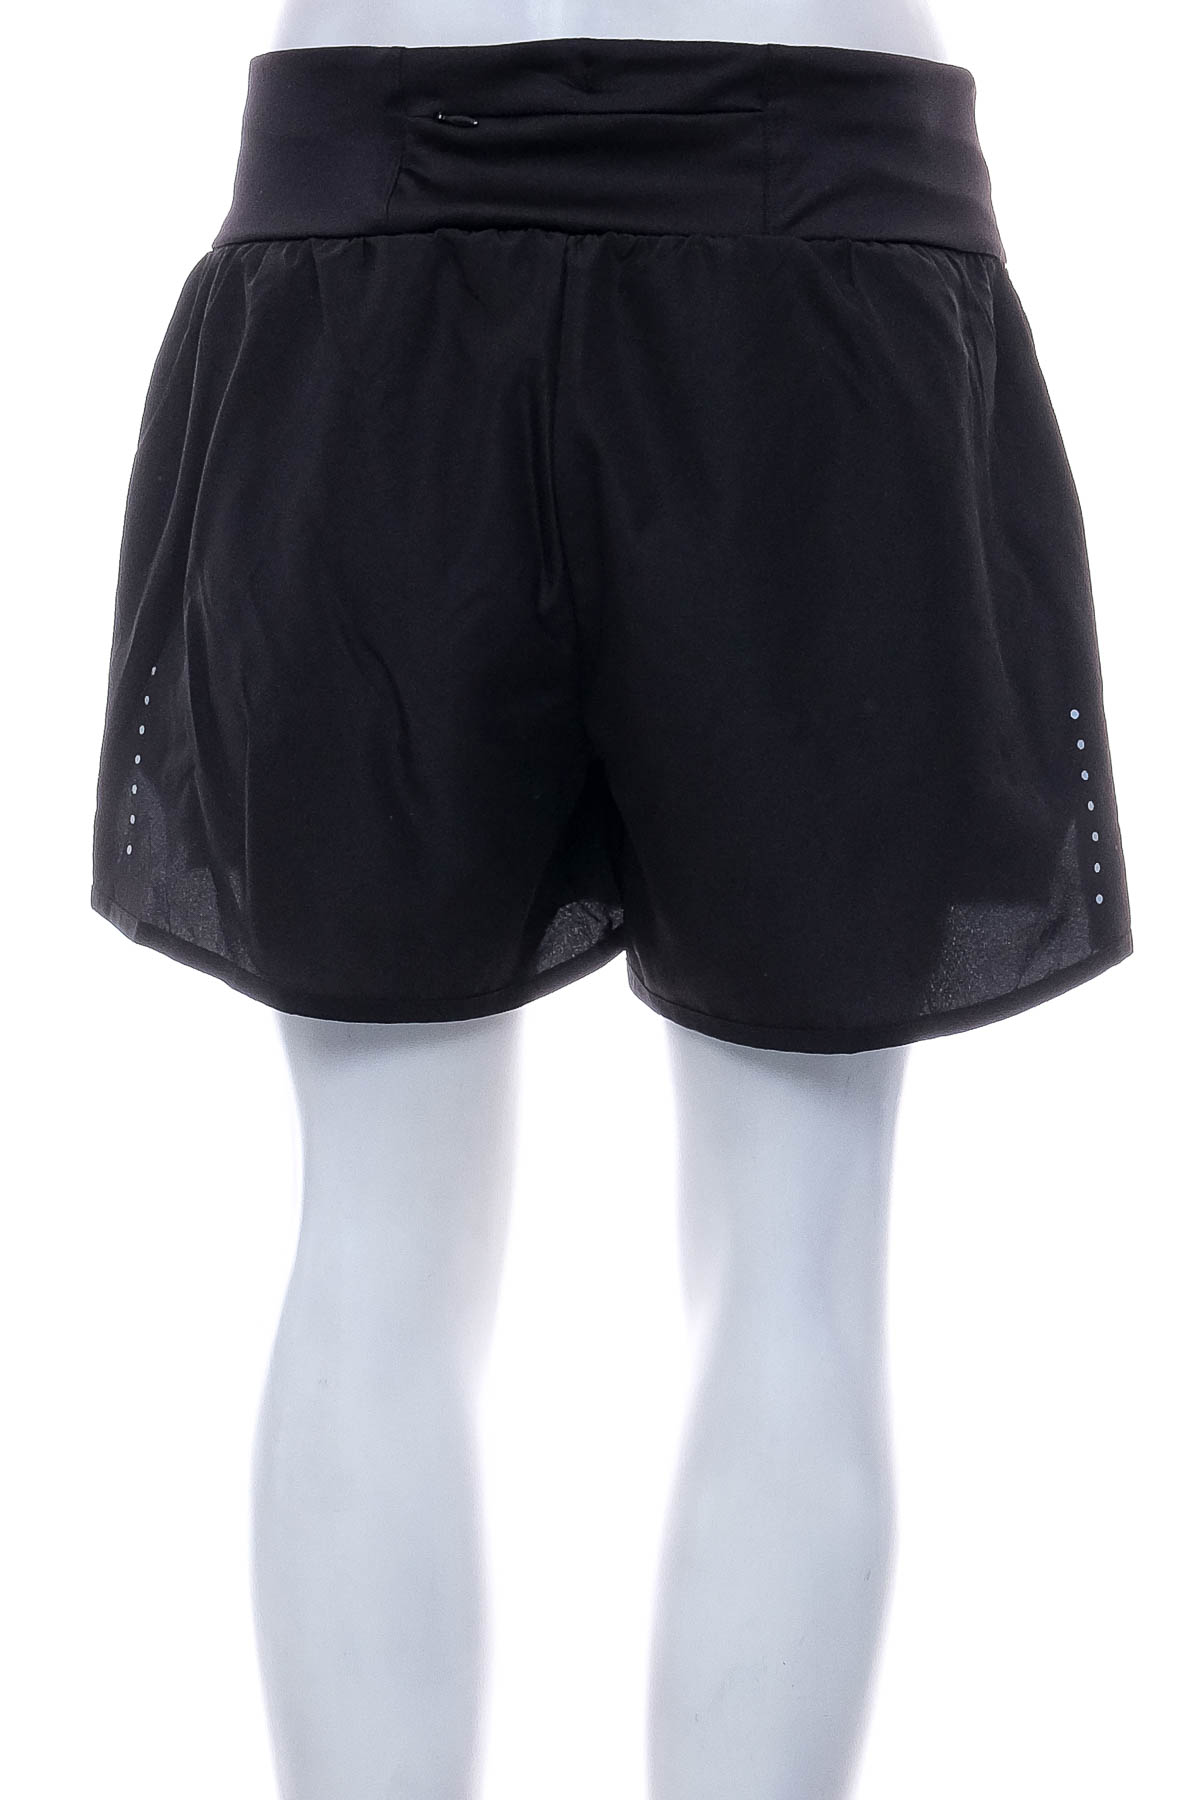 Women's shorts - Crivit - 1